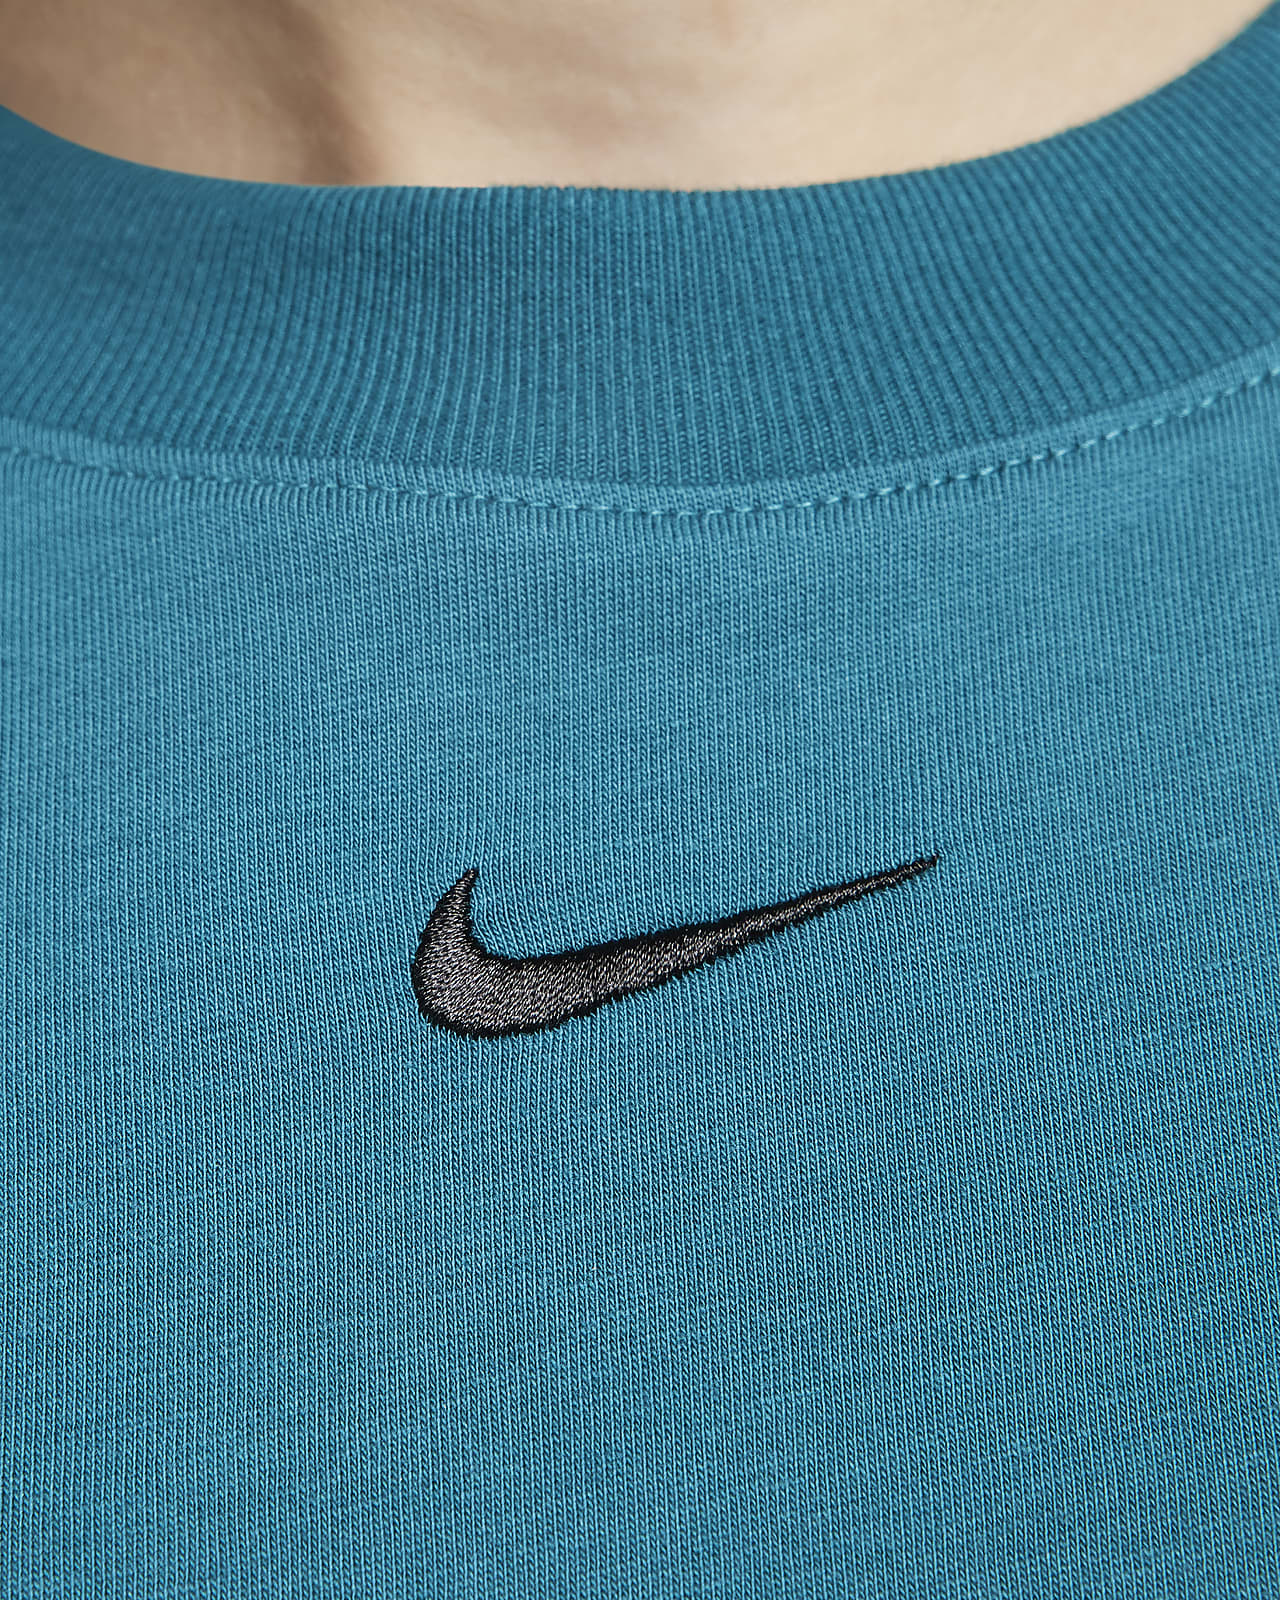 Tee-shirt Nike Sportswear pour Femme - DV9952